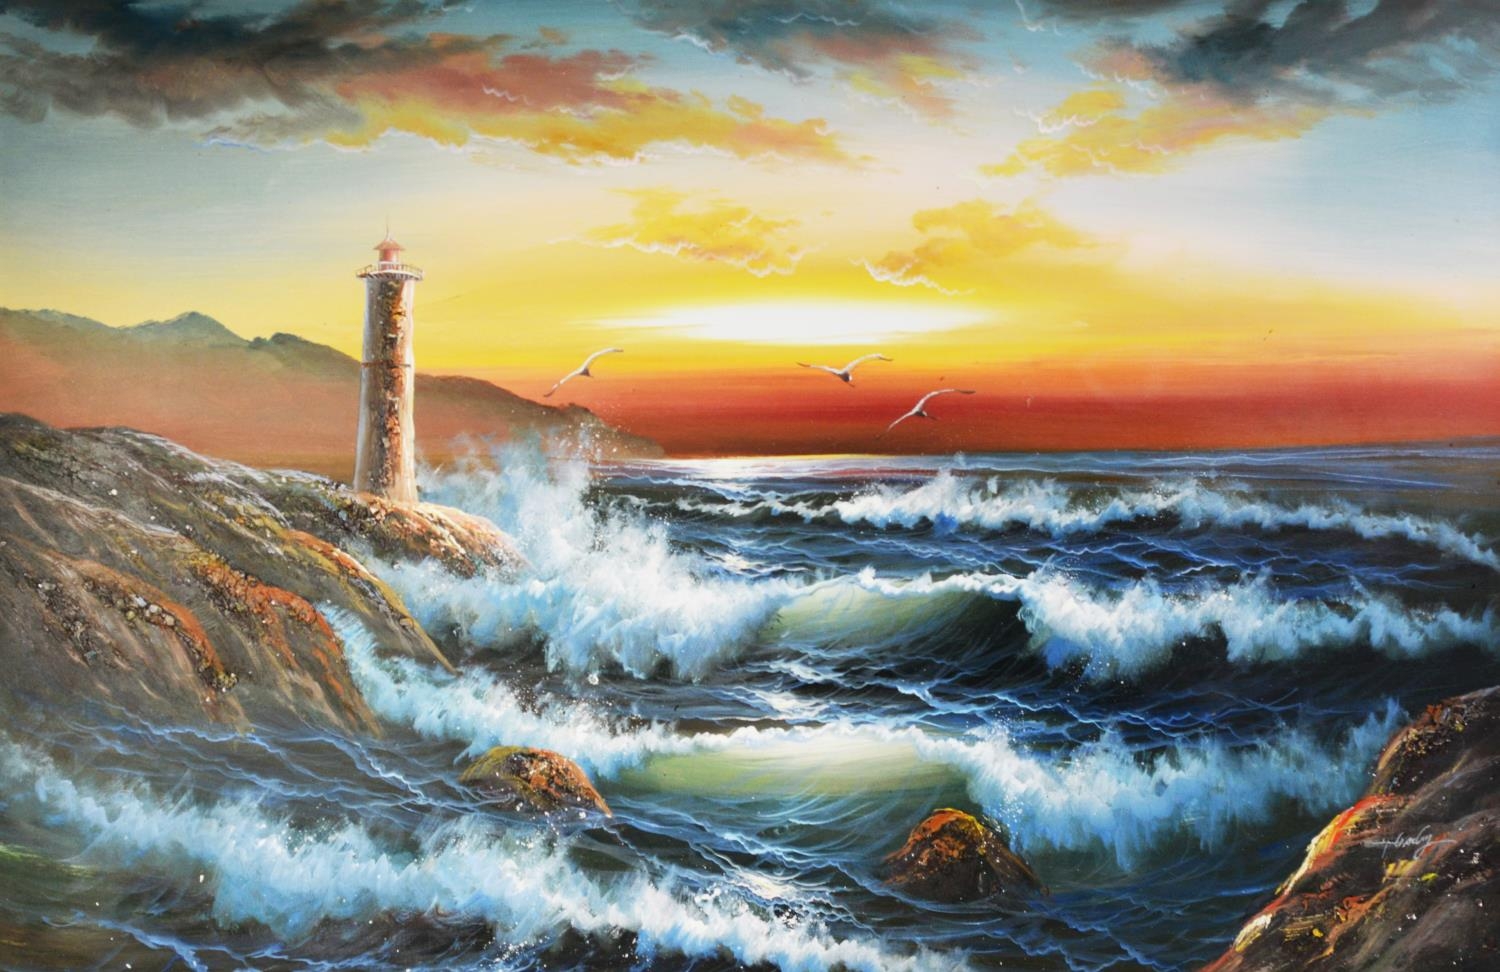 GABY? (TWENTIETH CENTURY) ACRYLIC ON CANVAS Coastal scene at dusk with lighthouse and seagulls